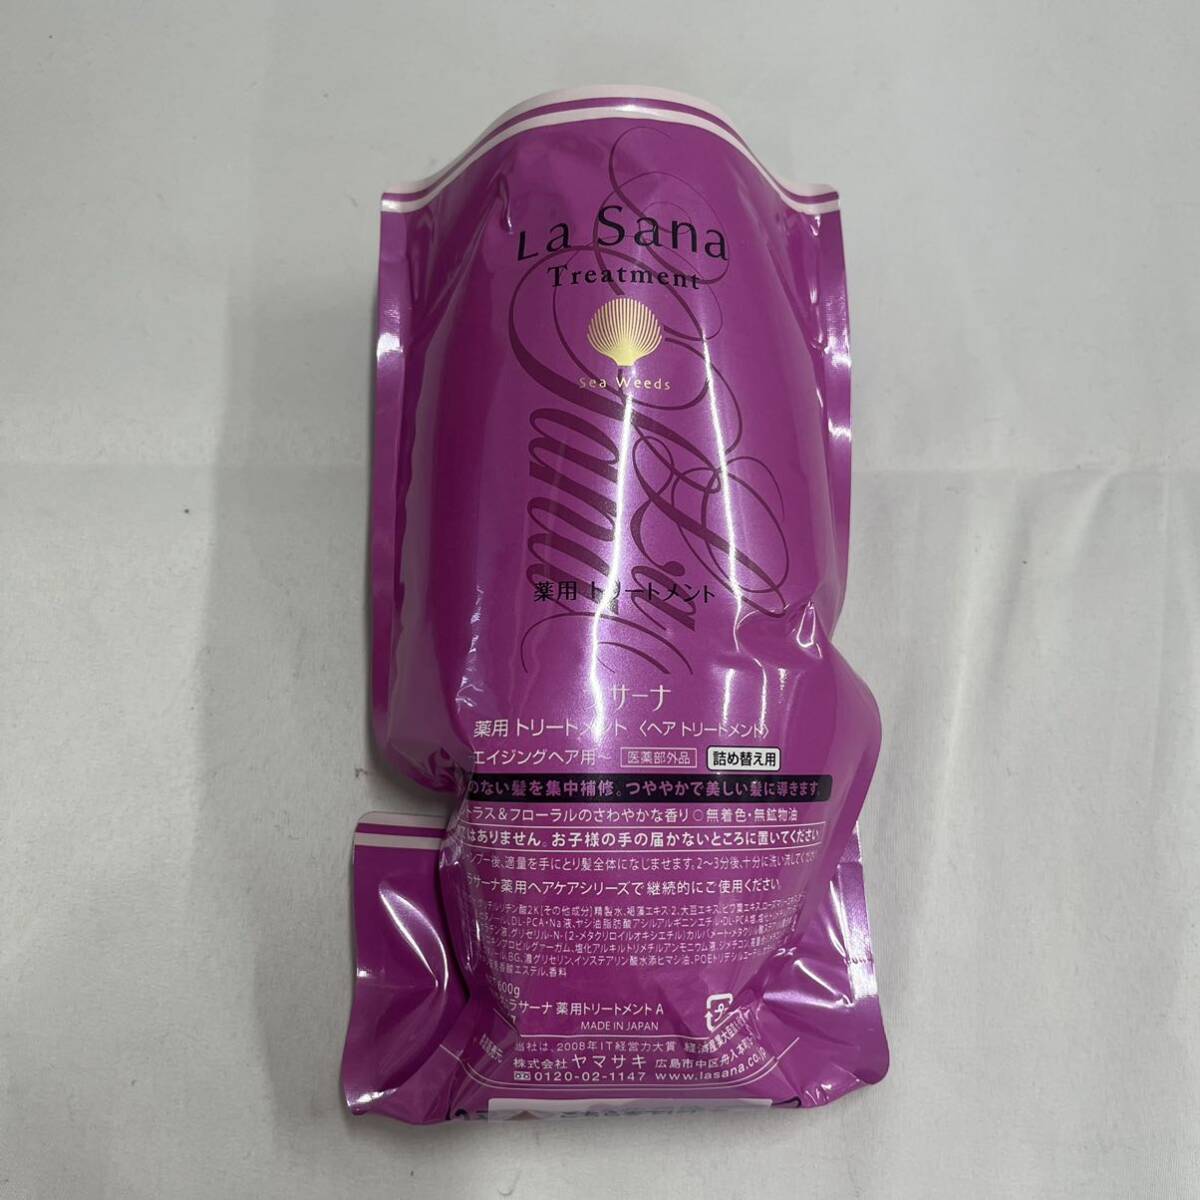 [ new goods unused ] La Sana medicine for treatment hair treatment aging hair for for refill 